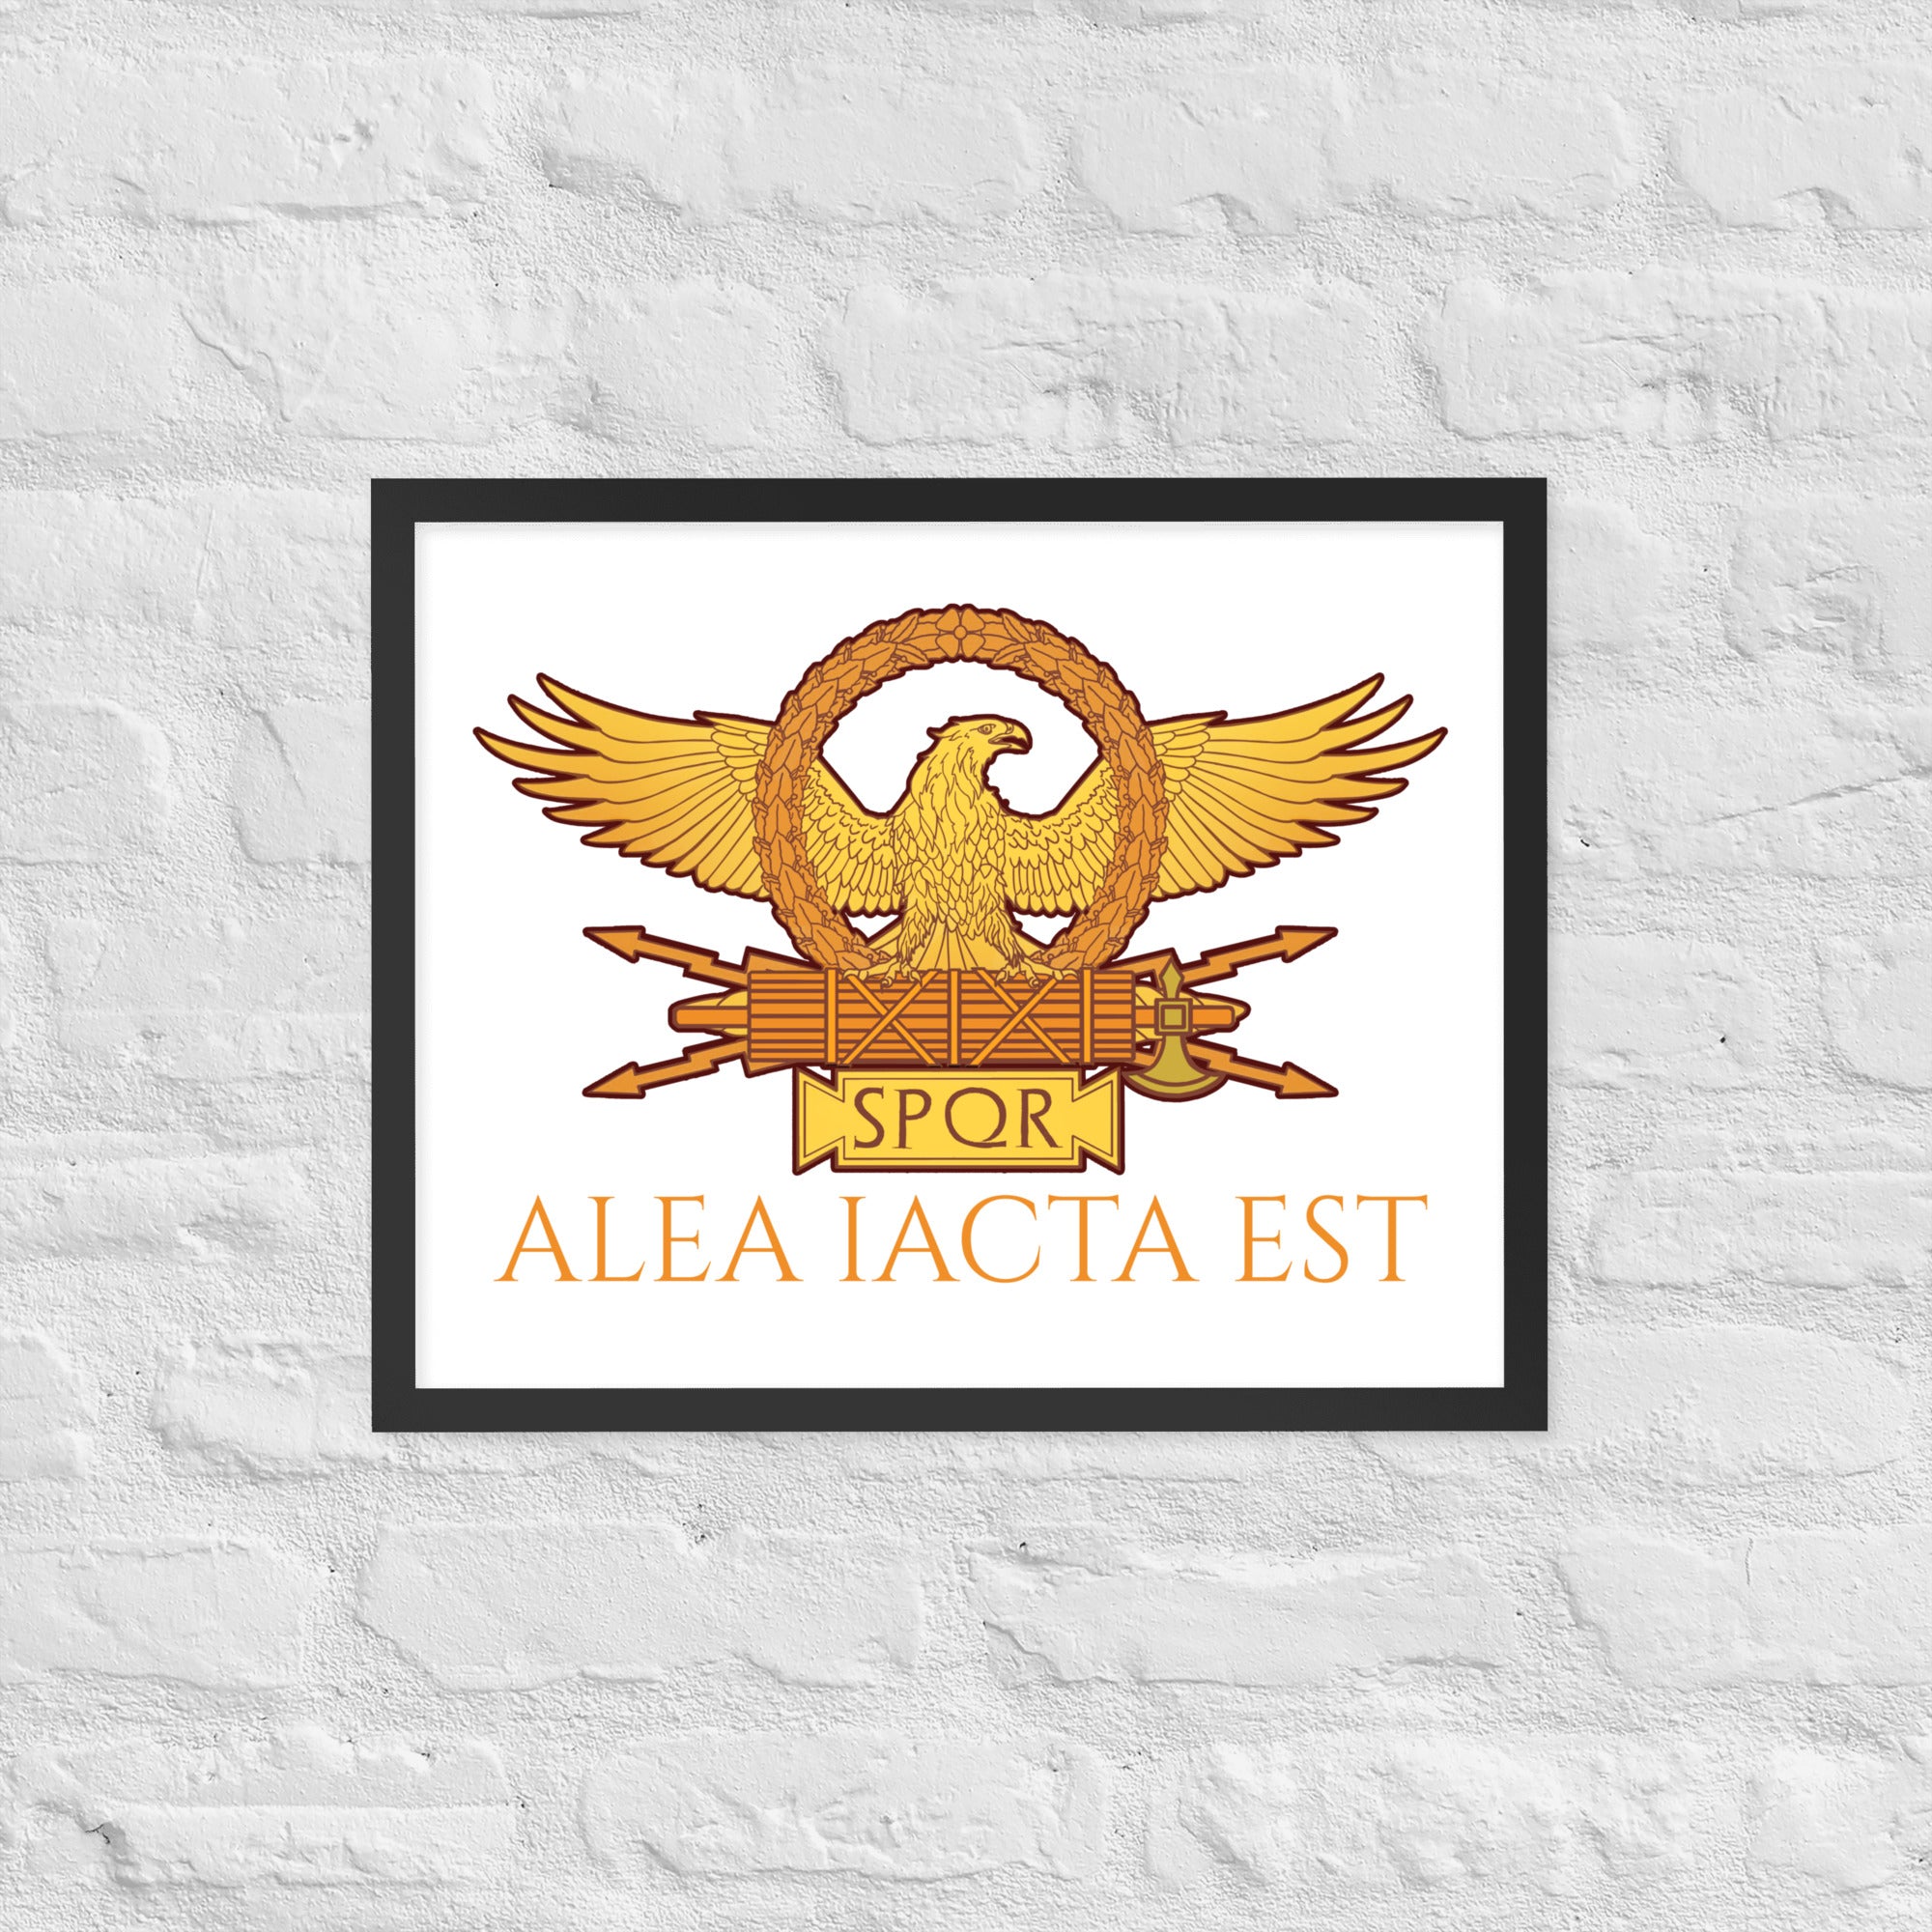 Alea Iacta Est - The Die Is Cast - Julius Caesar - Ancient Rome Framed poster